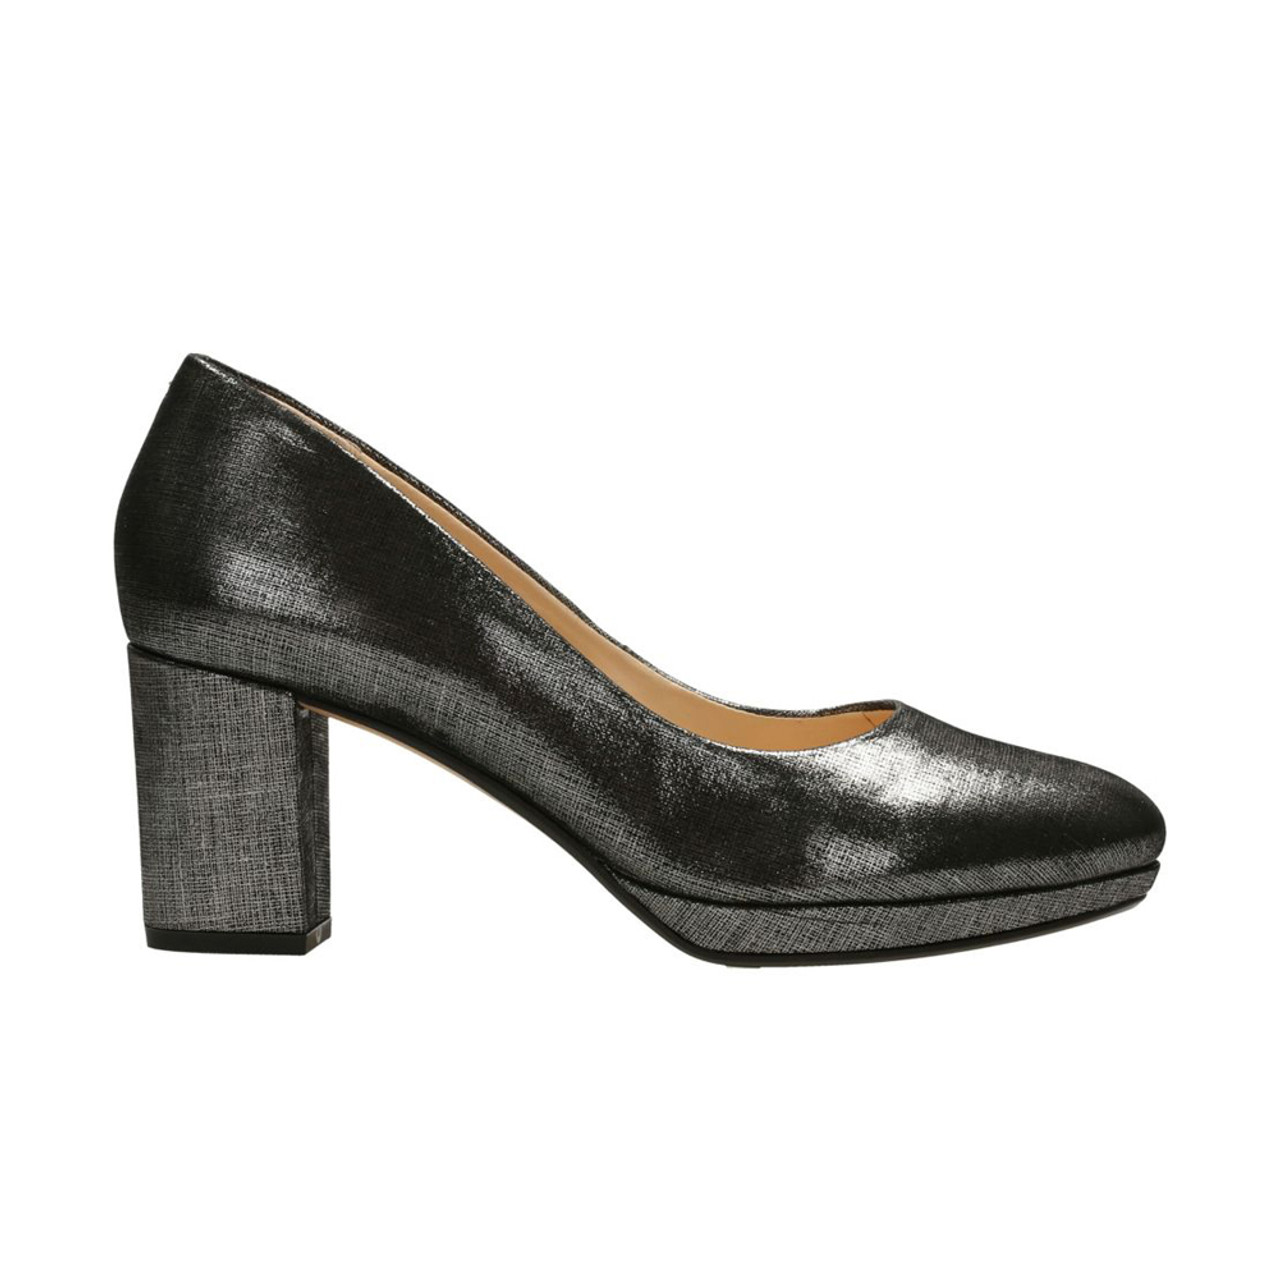 Clarks Women's Kelda Hope Pump - Metallic Discount Clarks Ladies Shoes & More - Shoolu.com Shoolu.com